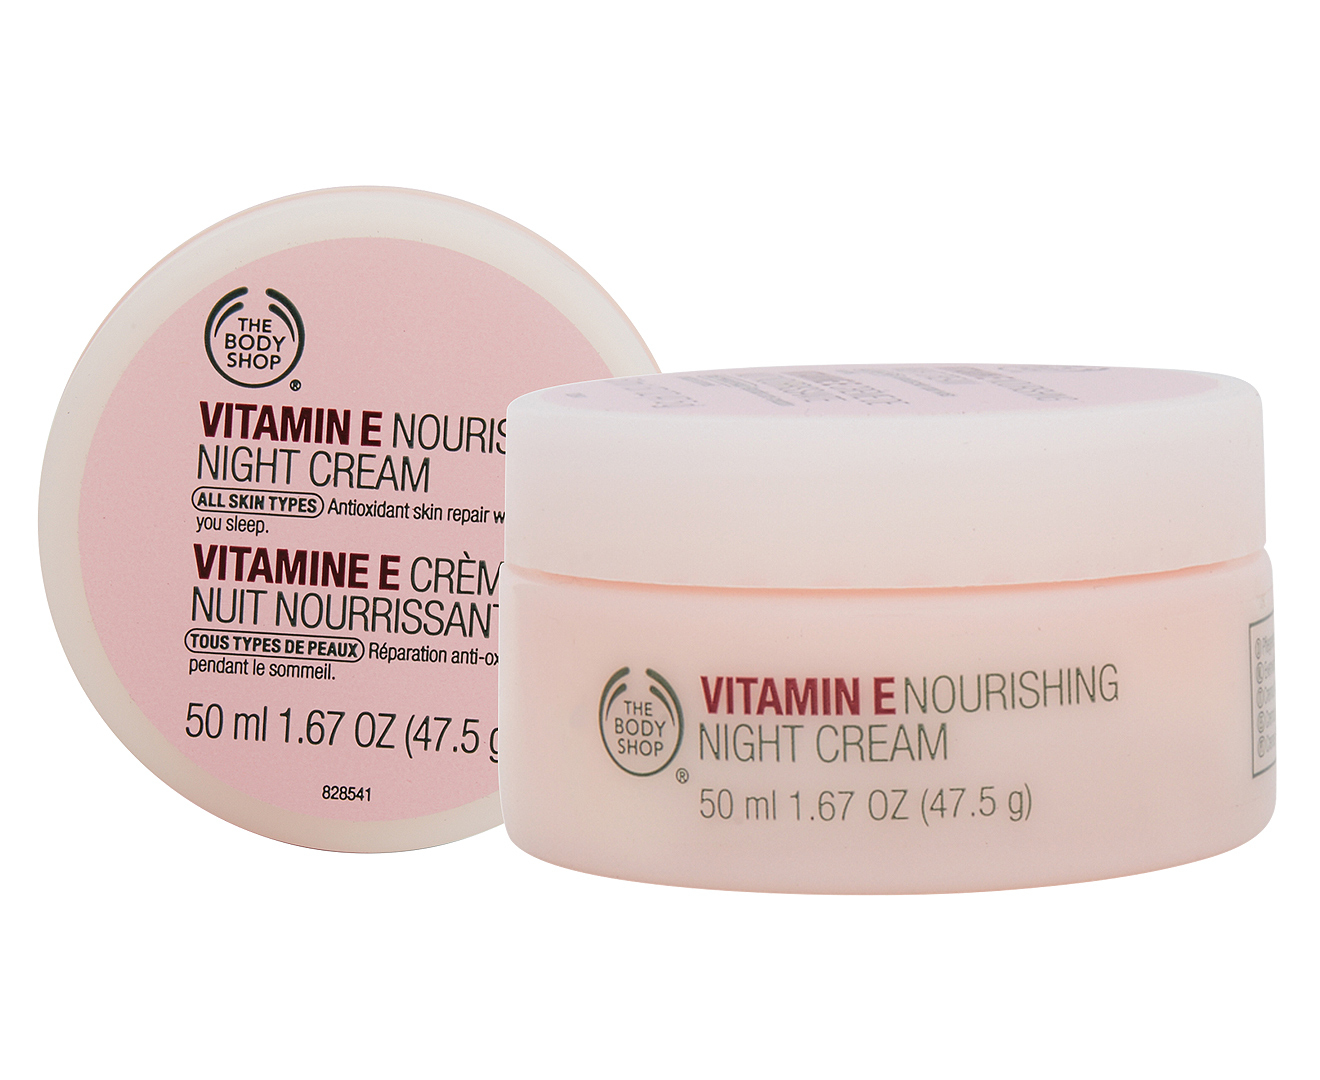 The Body Shop Vitamin E Nourishing Night Cream 50mL